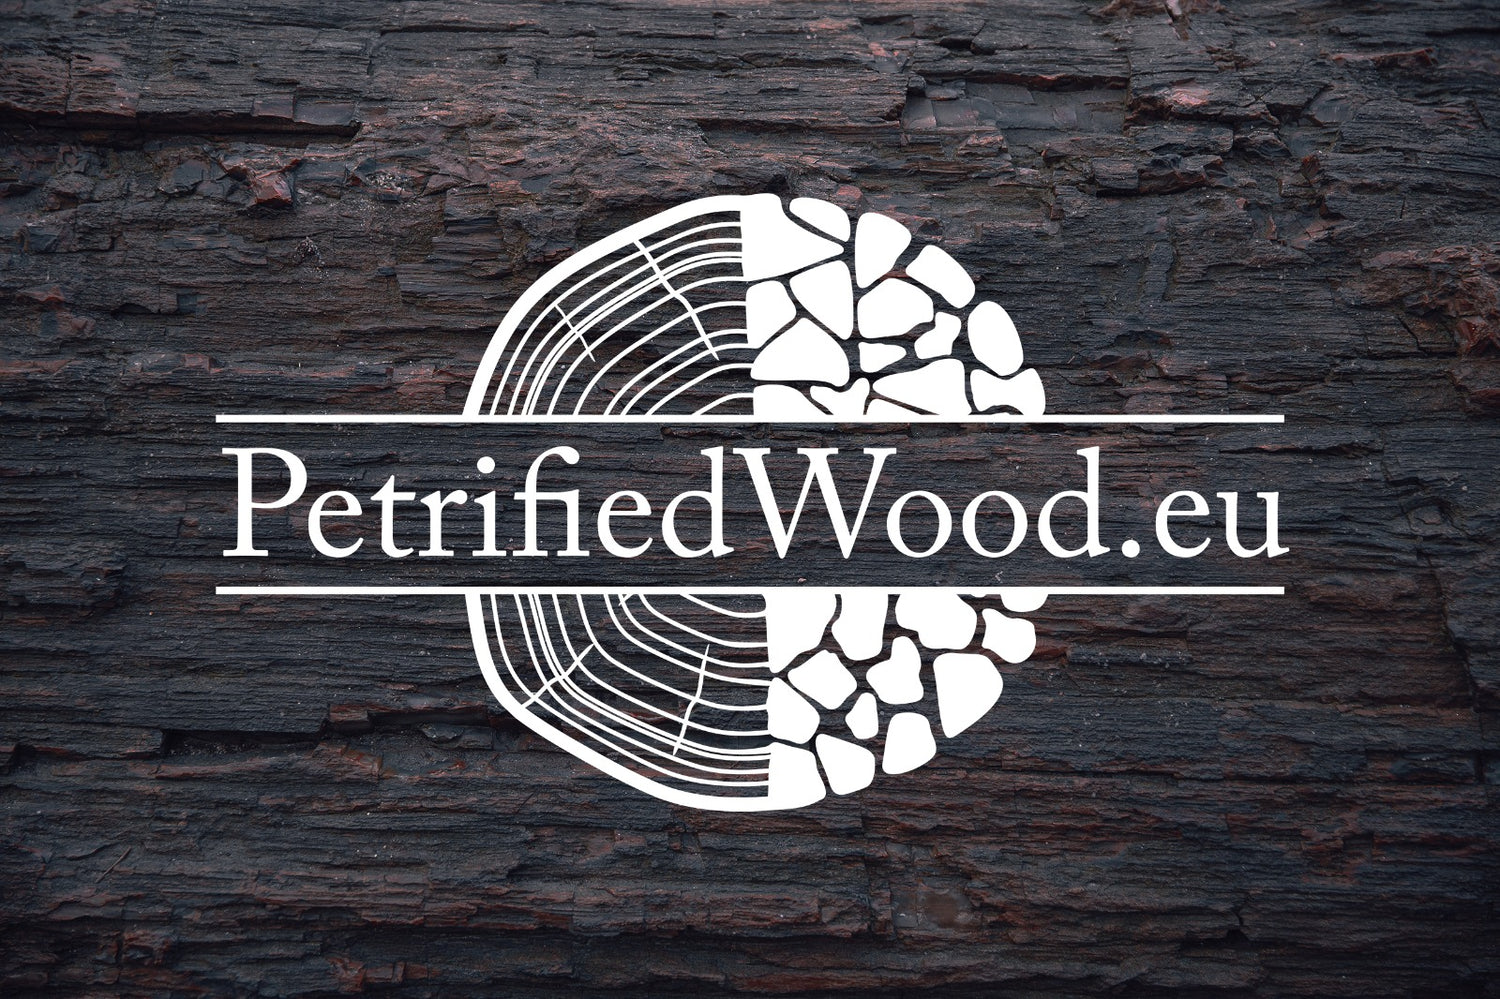 PetrifiedWood.eu logo